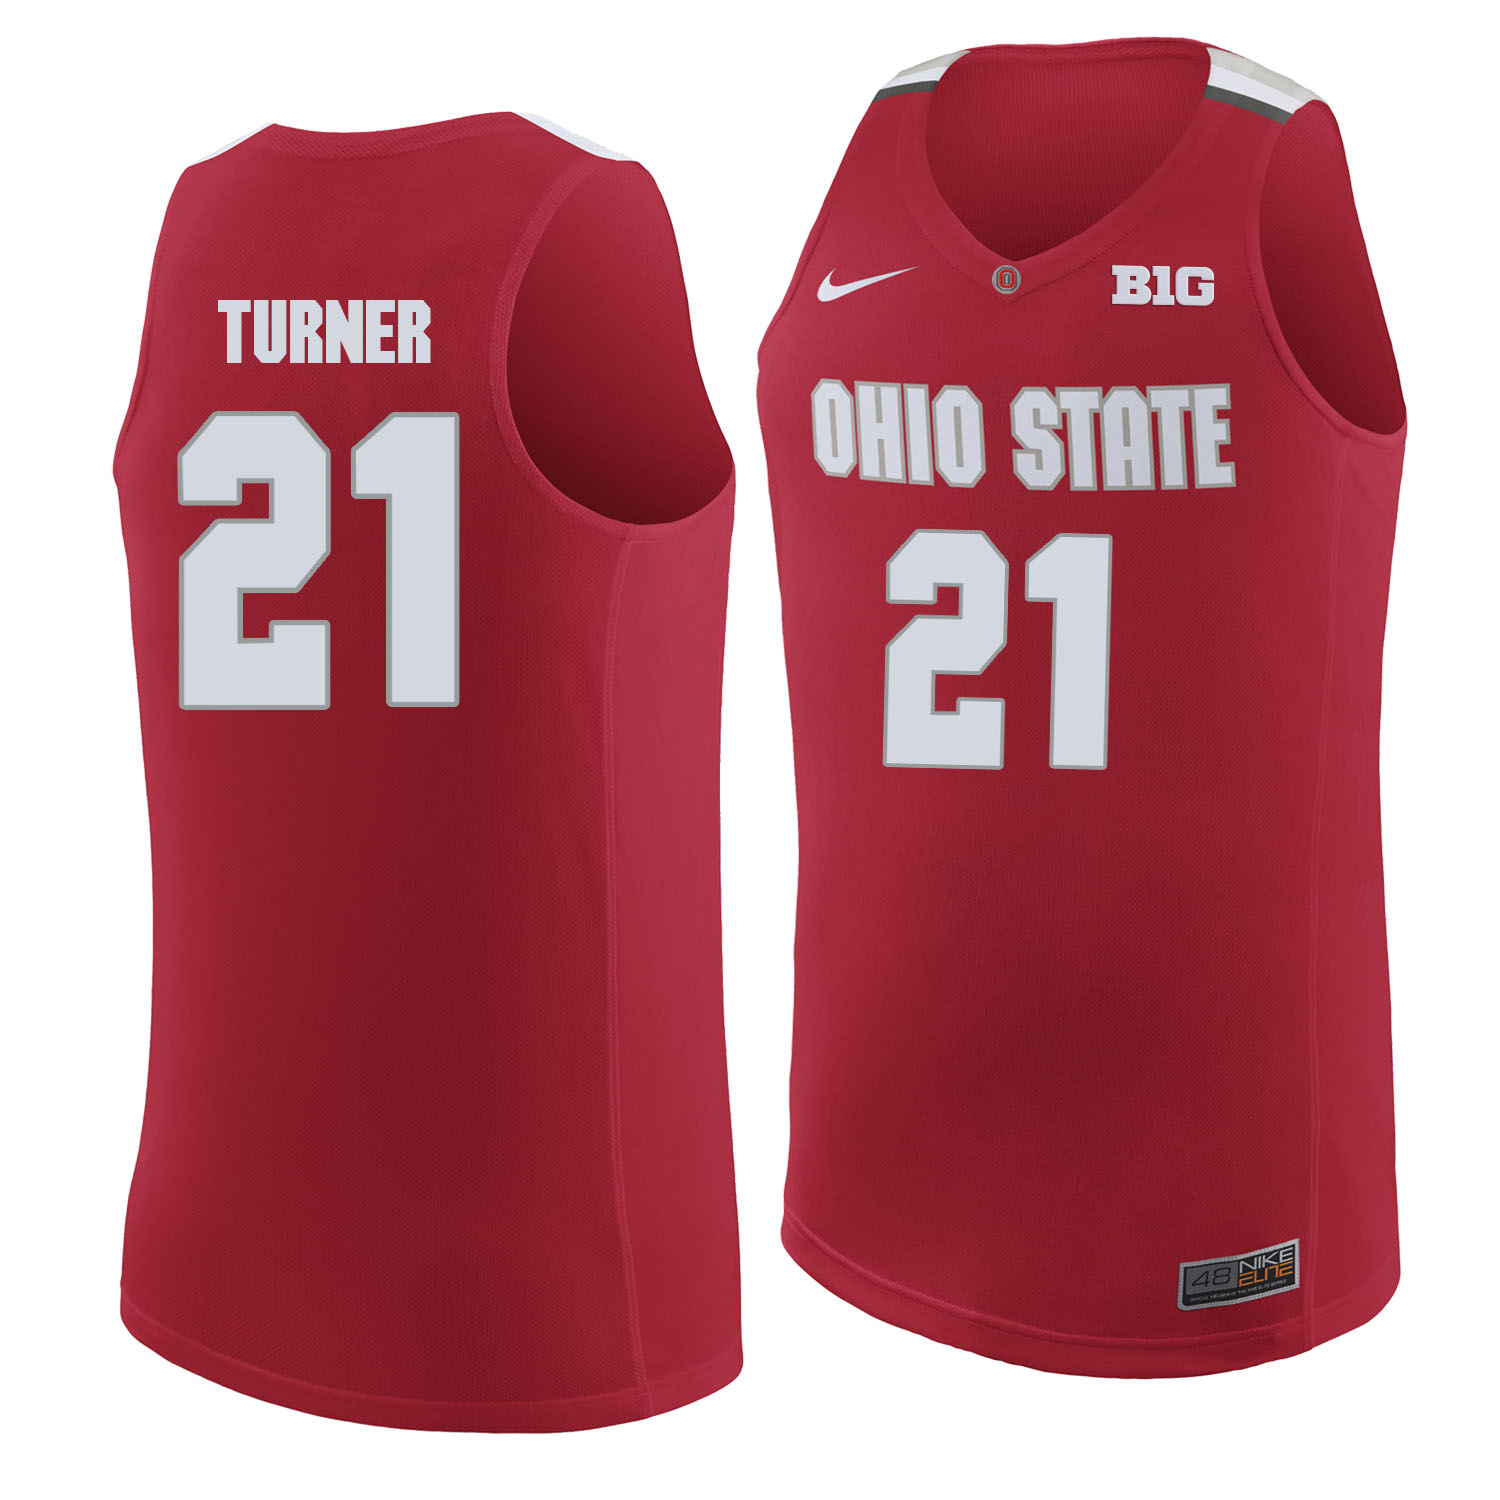 Ohio State Buckeyes 21 Evan Turner Red College Basketball Jersey